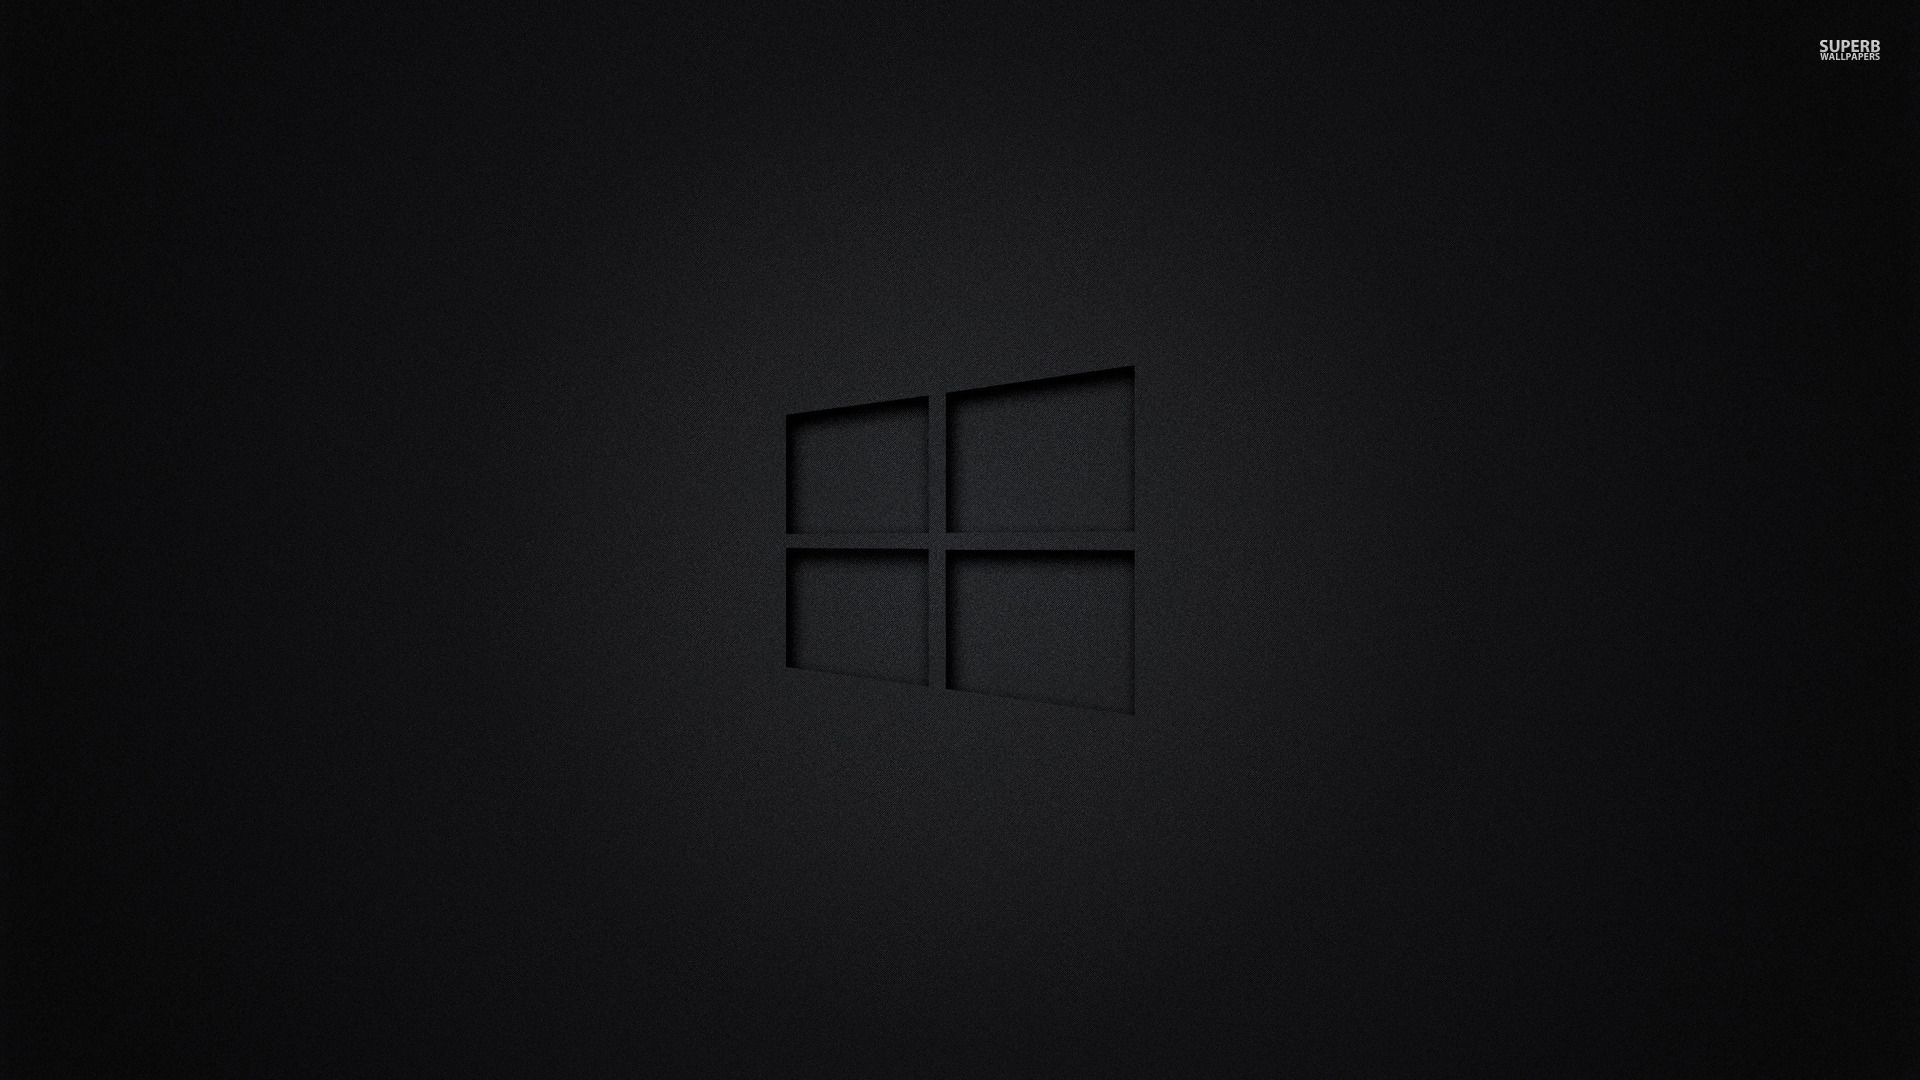 Windows 10 transparent logo on black wallpaper - Computer